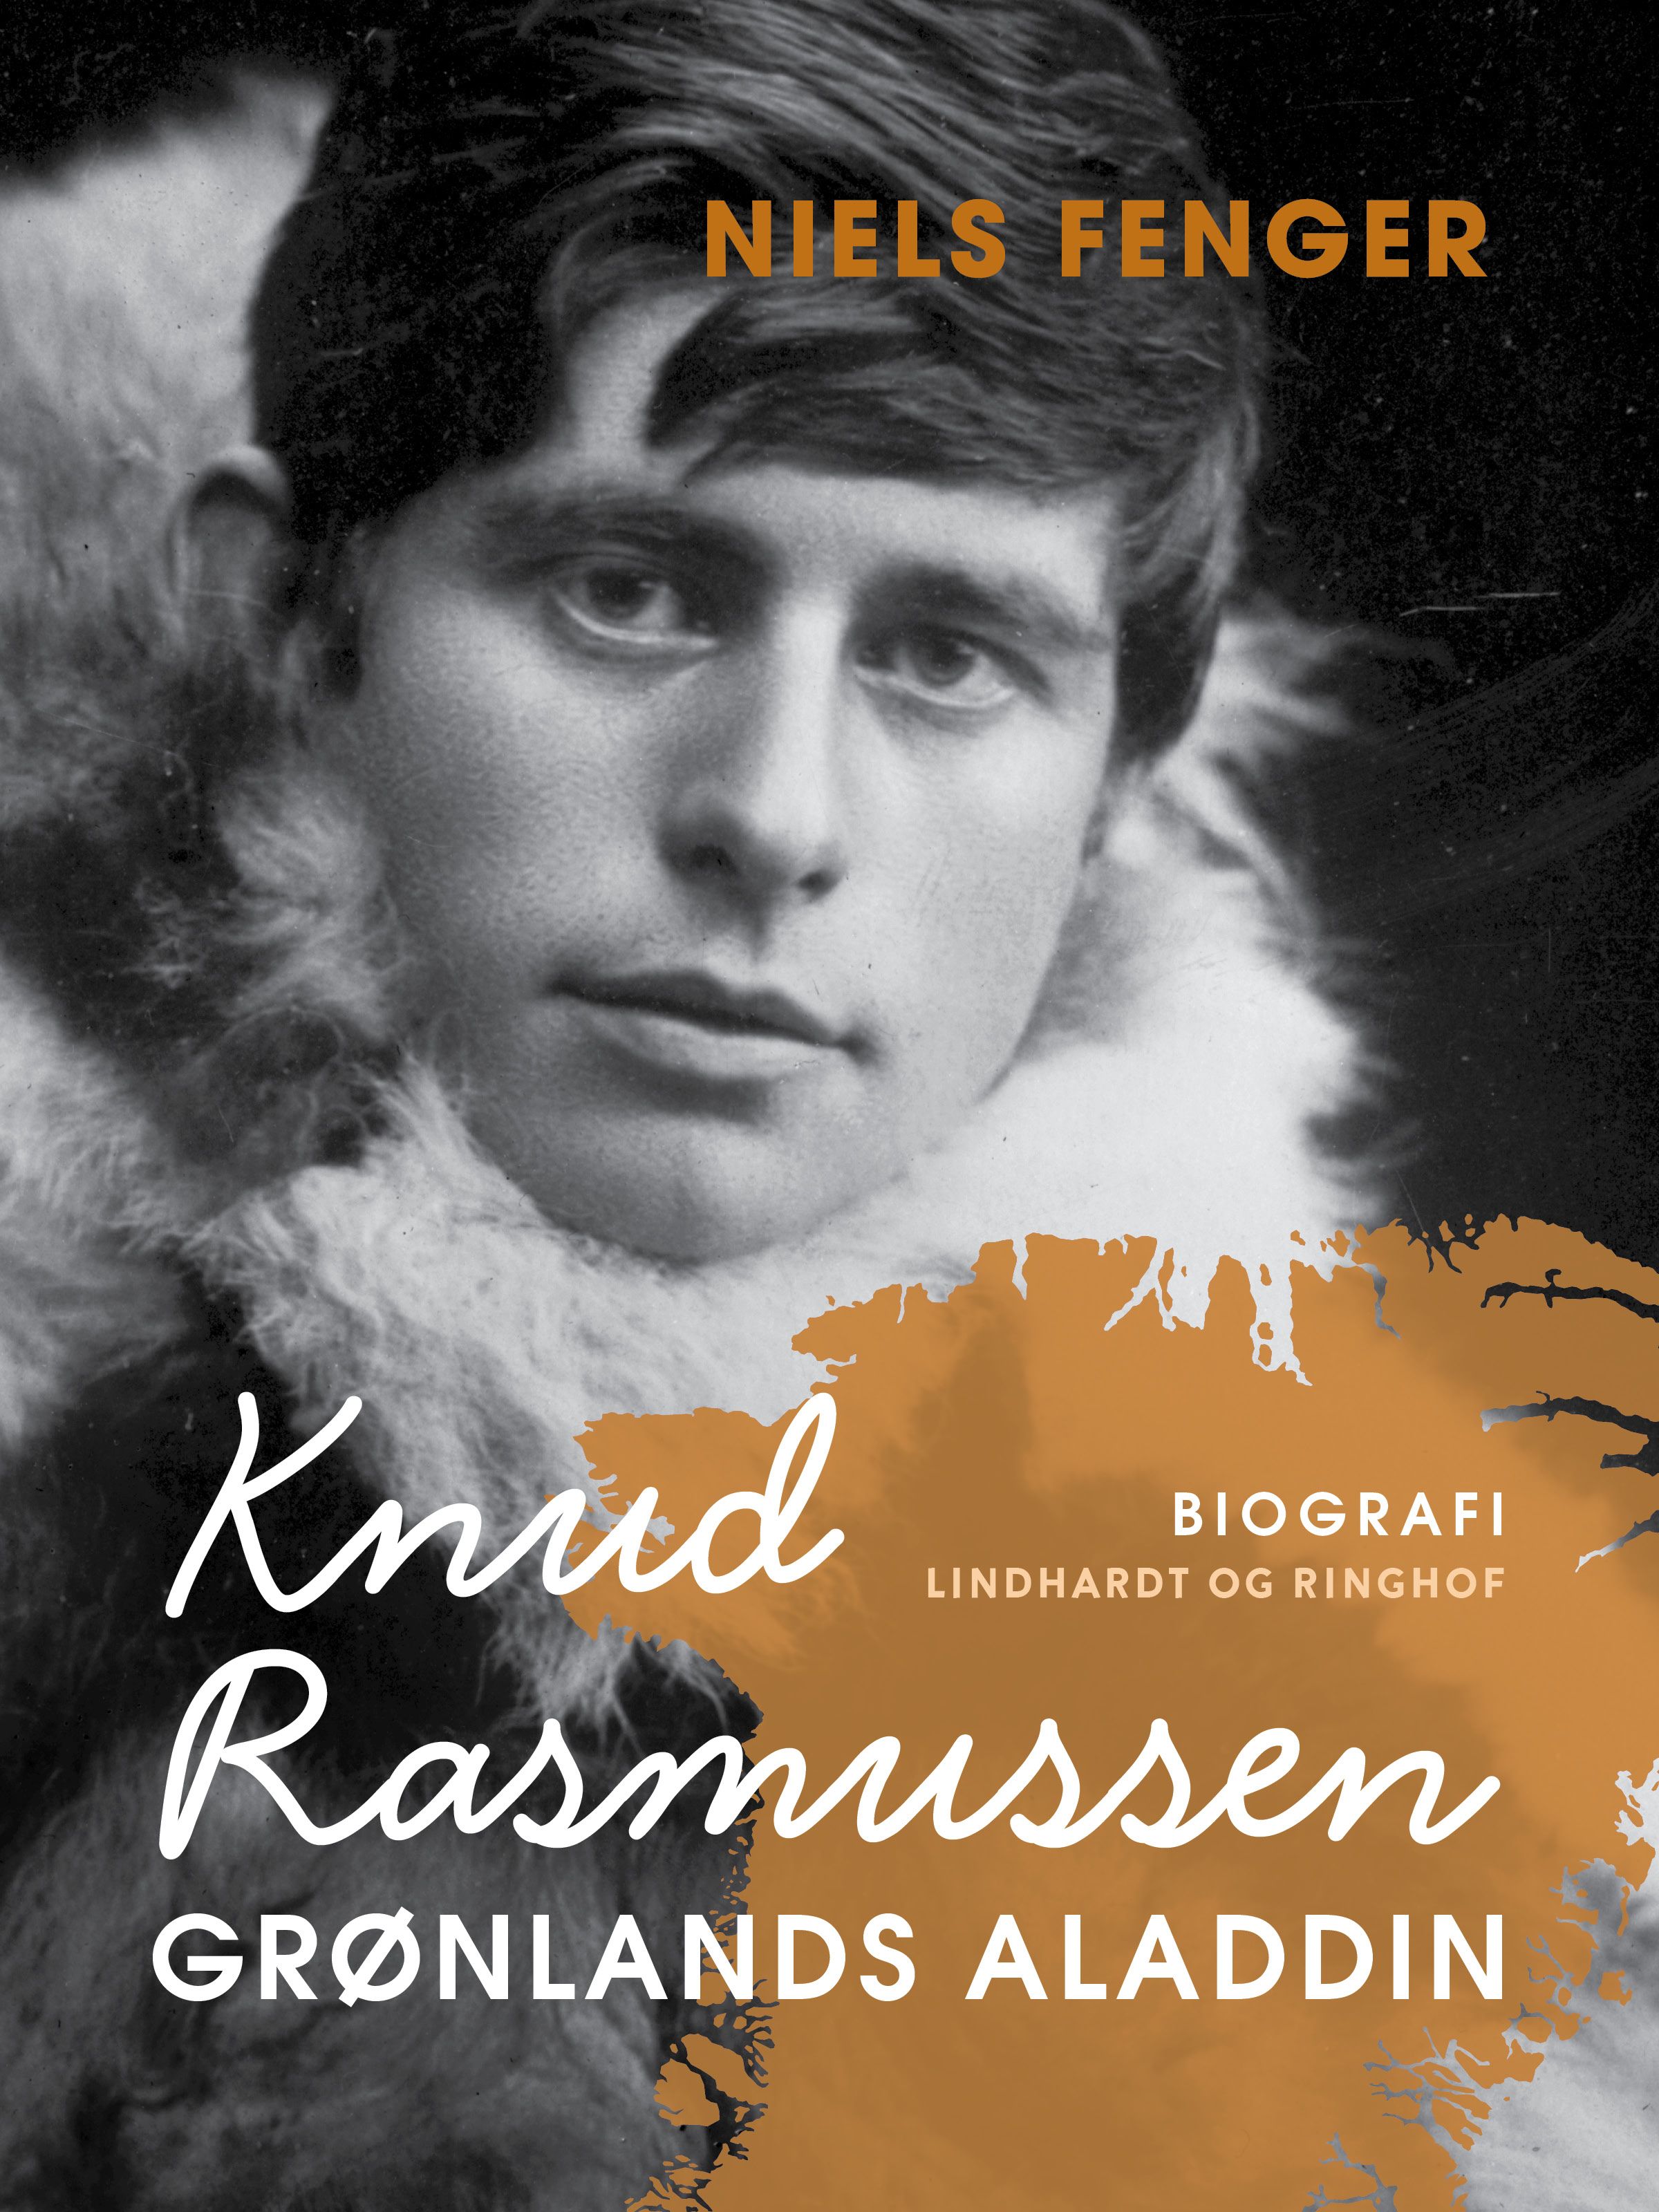 Knud Rasmussen. Grønlands Aladdin, eBook by Niels Fenger